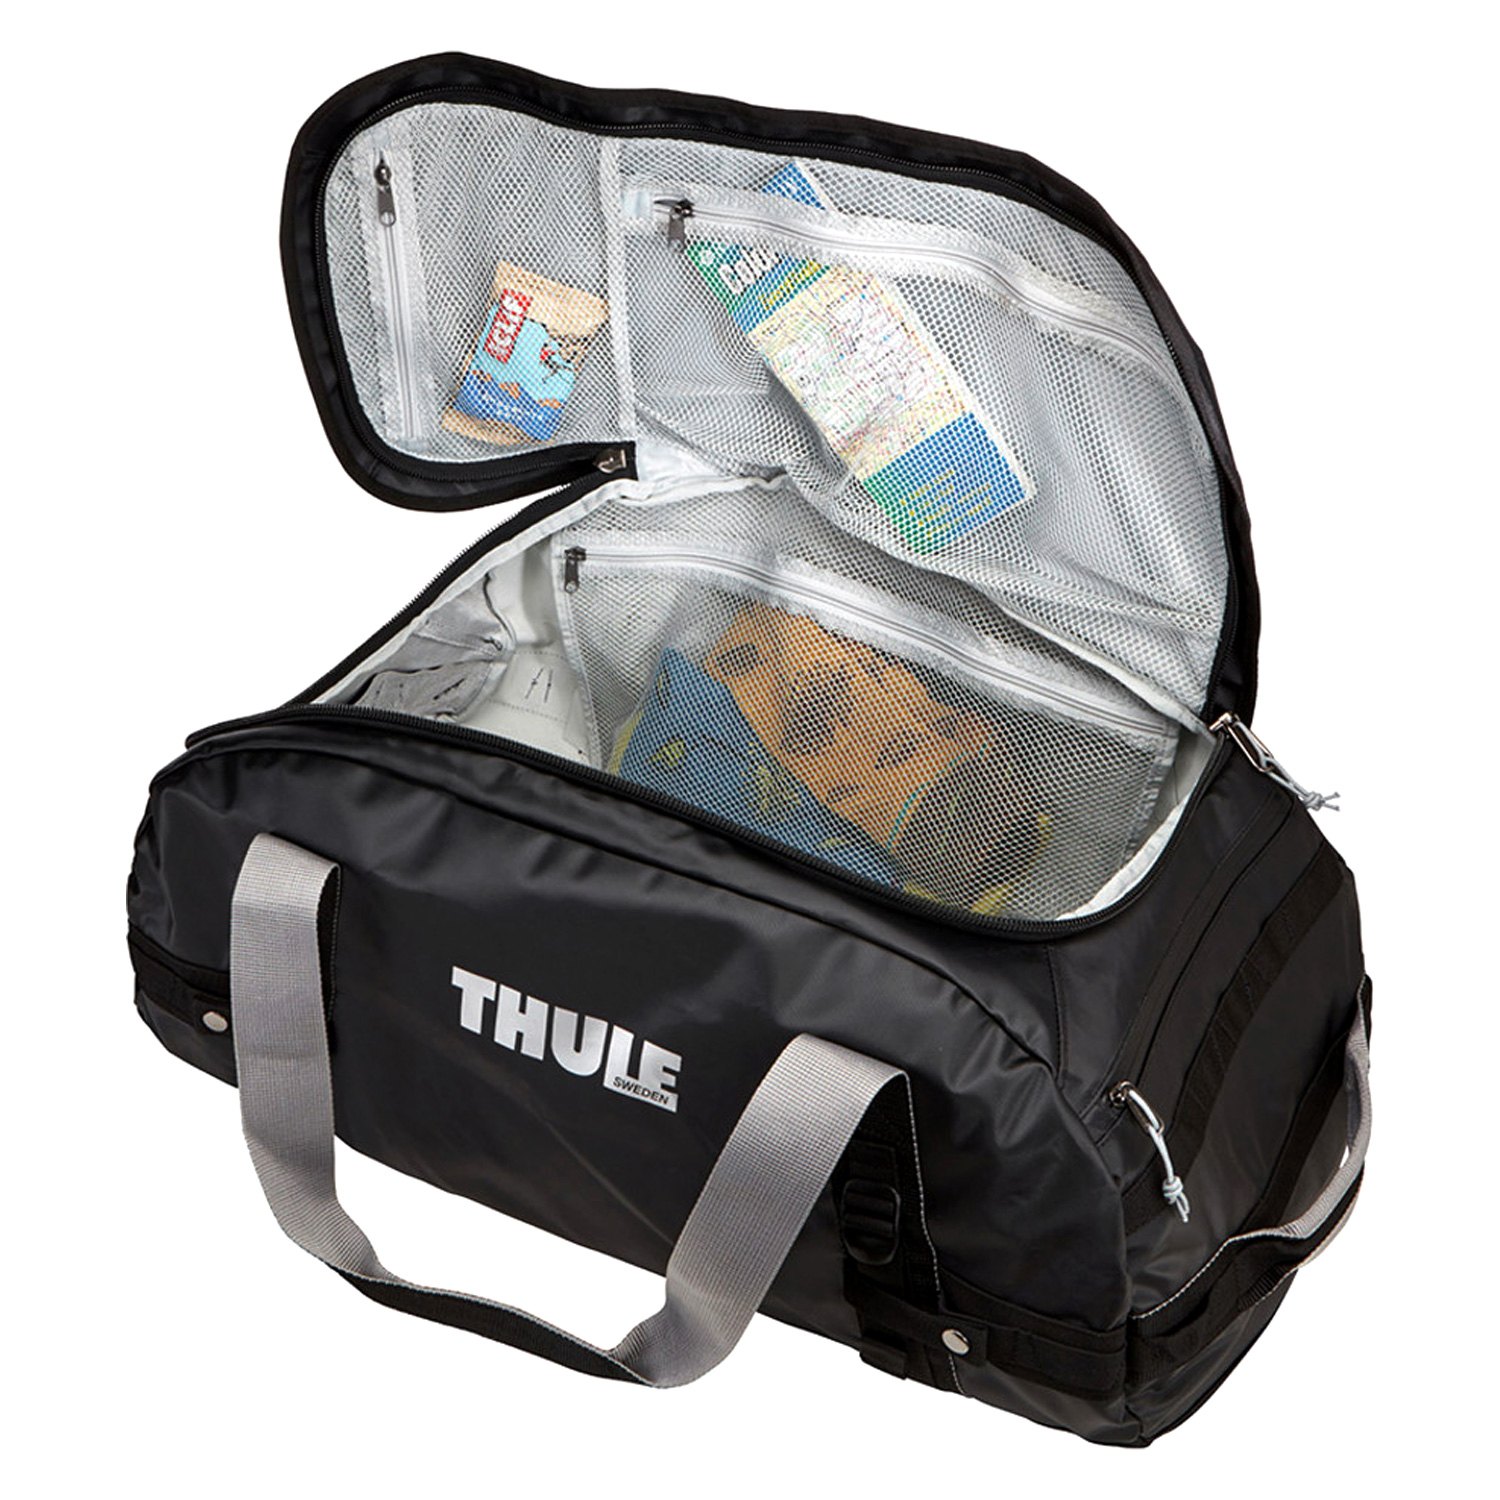 thule travel luggage